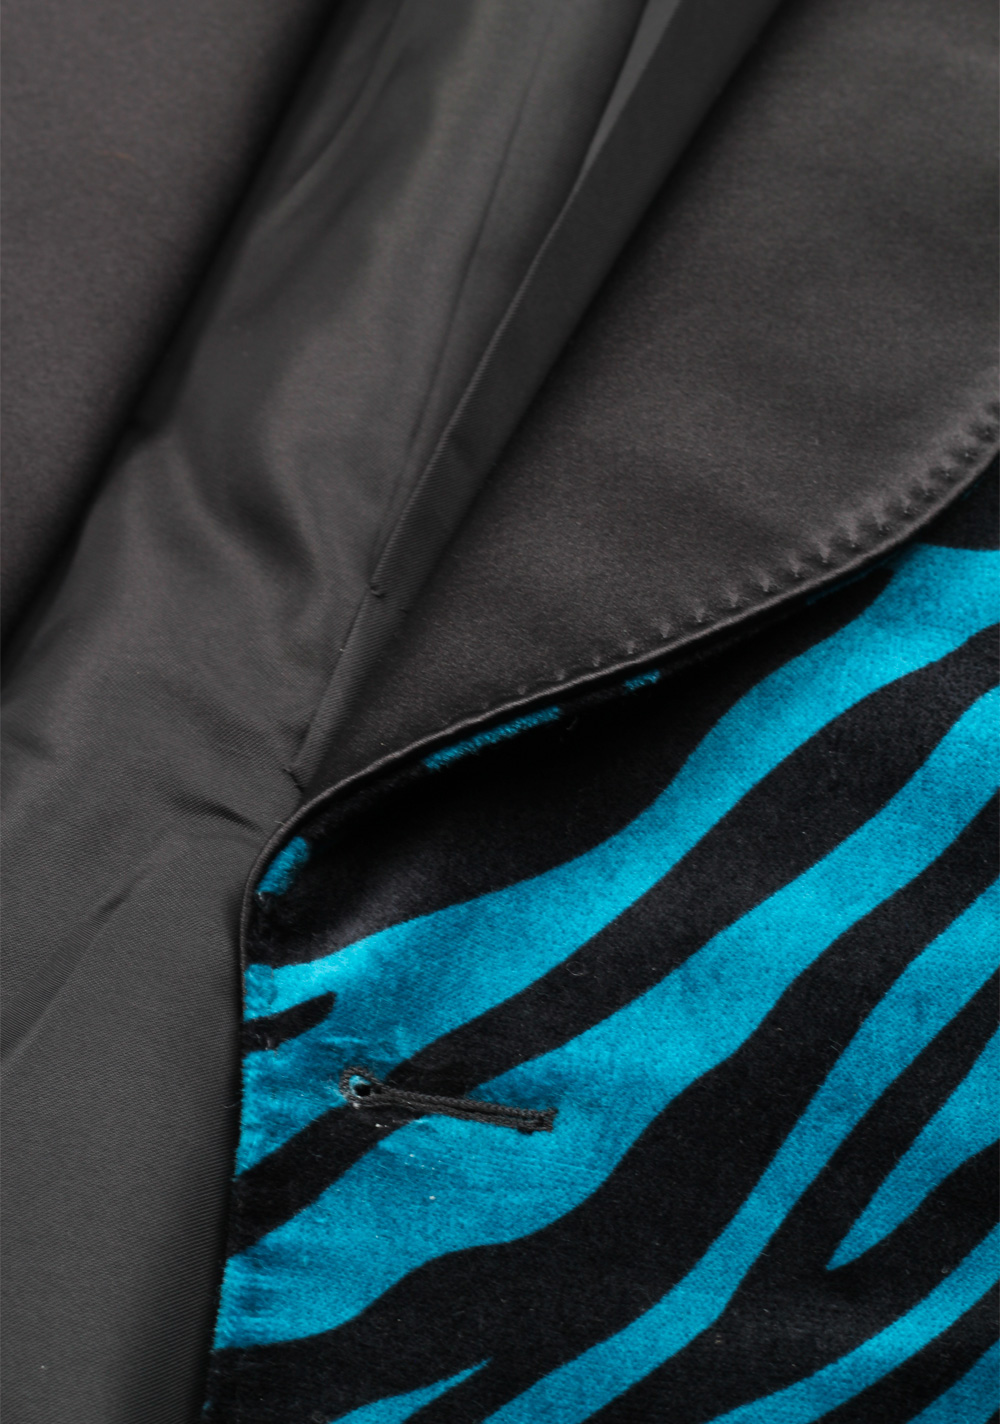 TOM FORD Shelton Shawl Collar Sport Coat Tuxedo Dinner Jacket Size 48 / 38R U.S. | Costume Limité